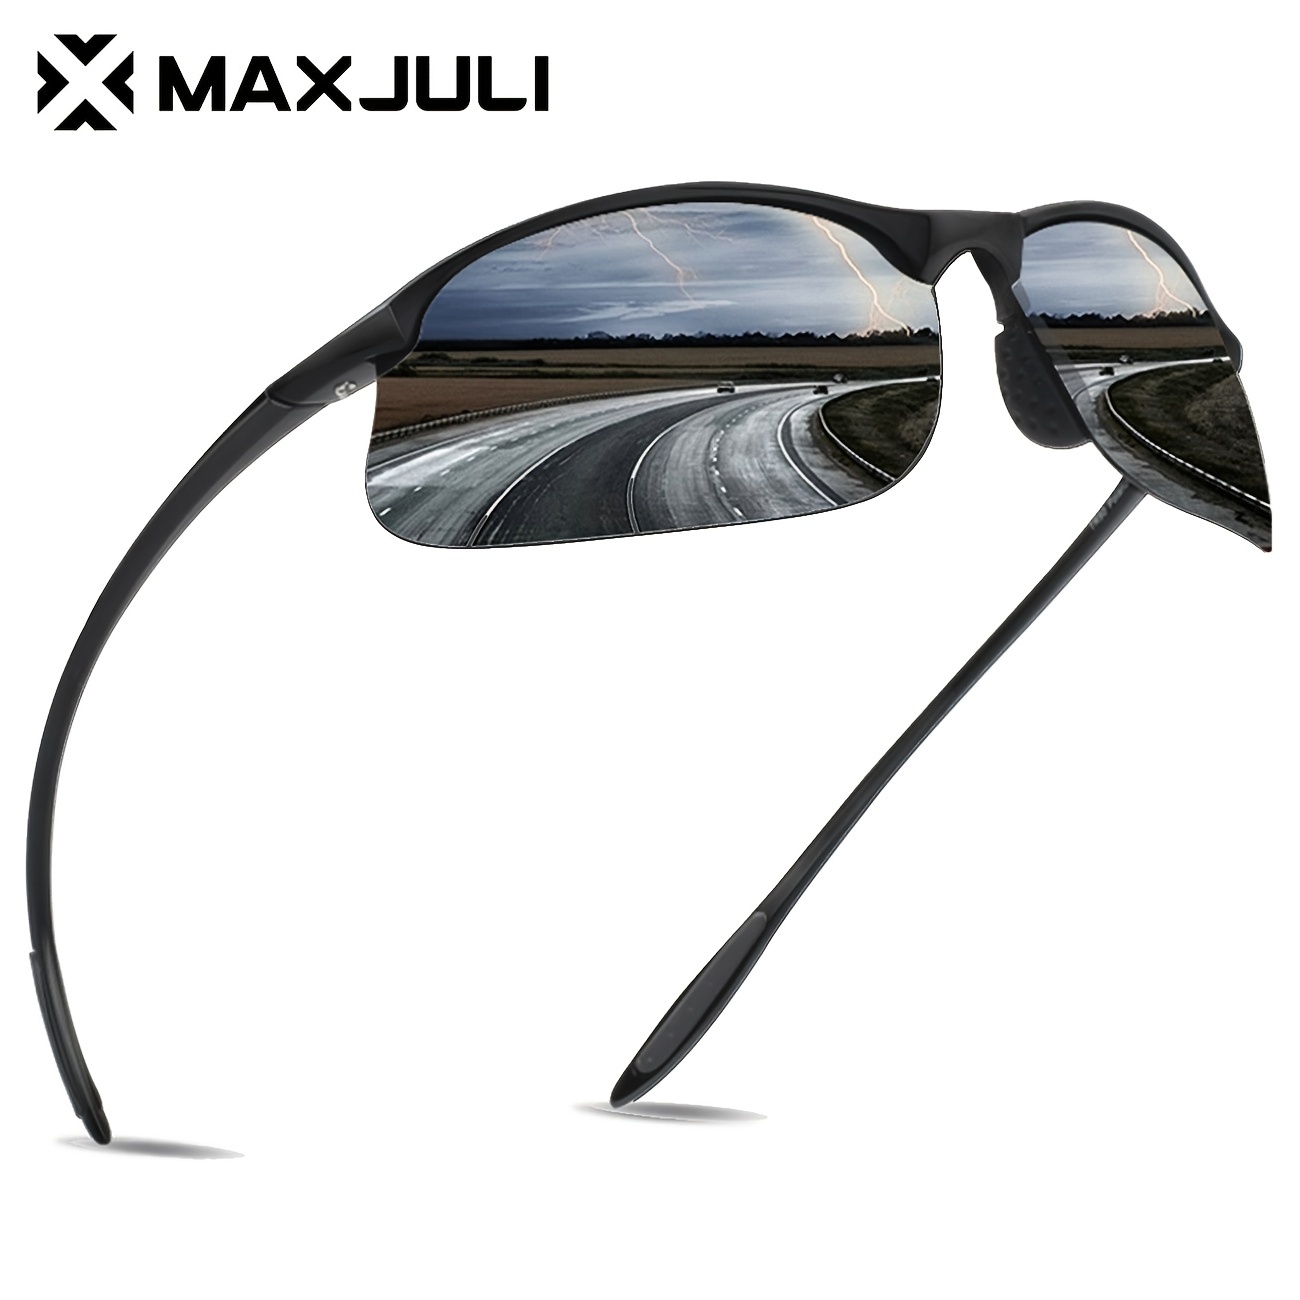 MAXJULI Sports UV Protection Polarized Sunglasses TR90 Rimless Frame for Running Fishing Baseball Driving MJ8002 Sun Glasses,Goggles Sunglasses,Y2k